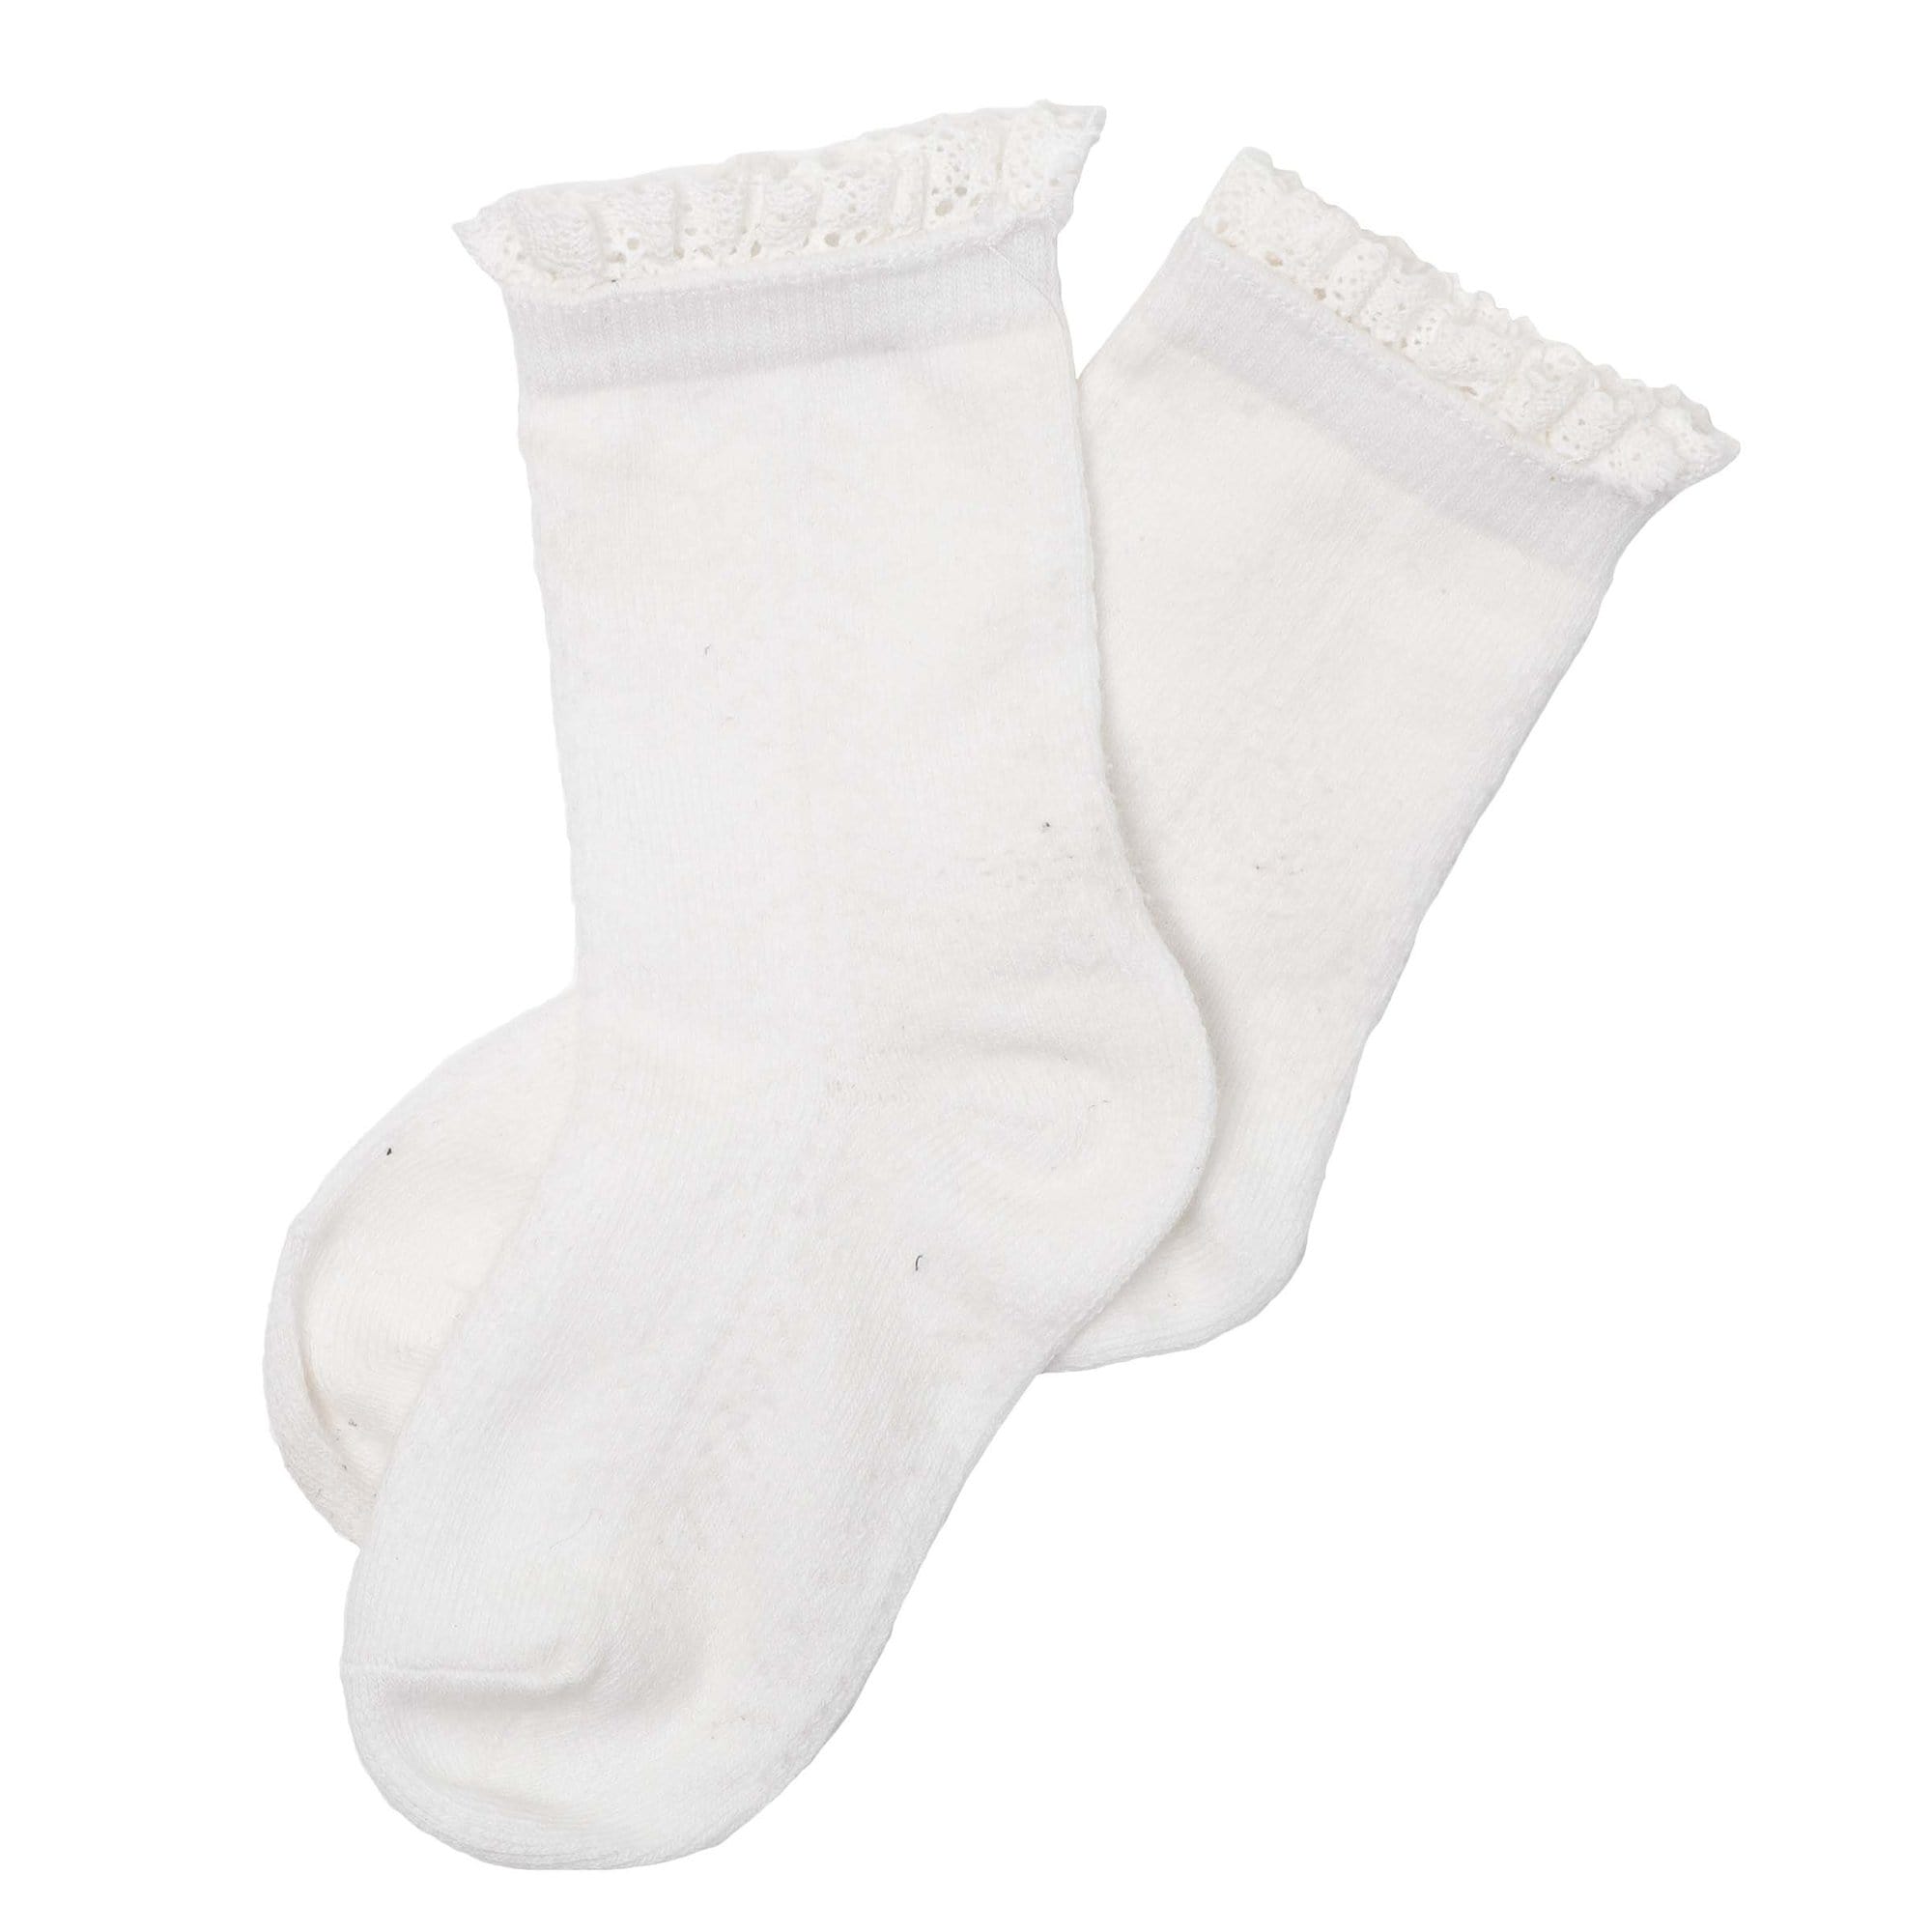 Designer Kidz Accessory Socks Frilly Socks in White